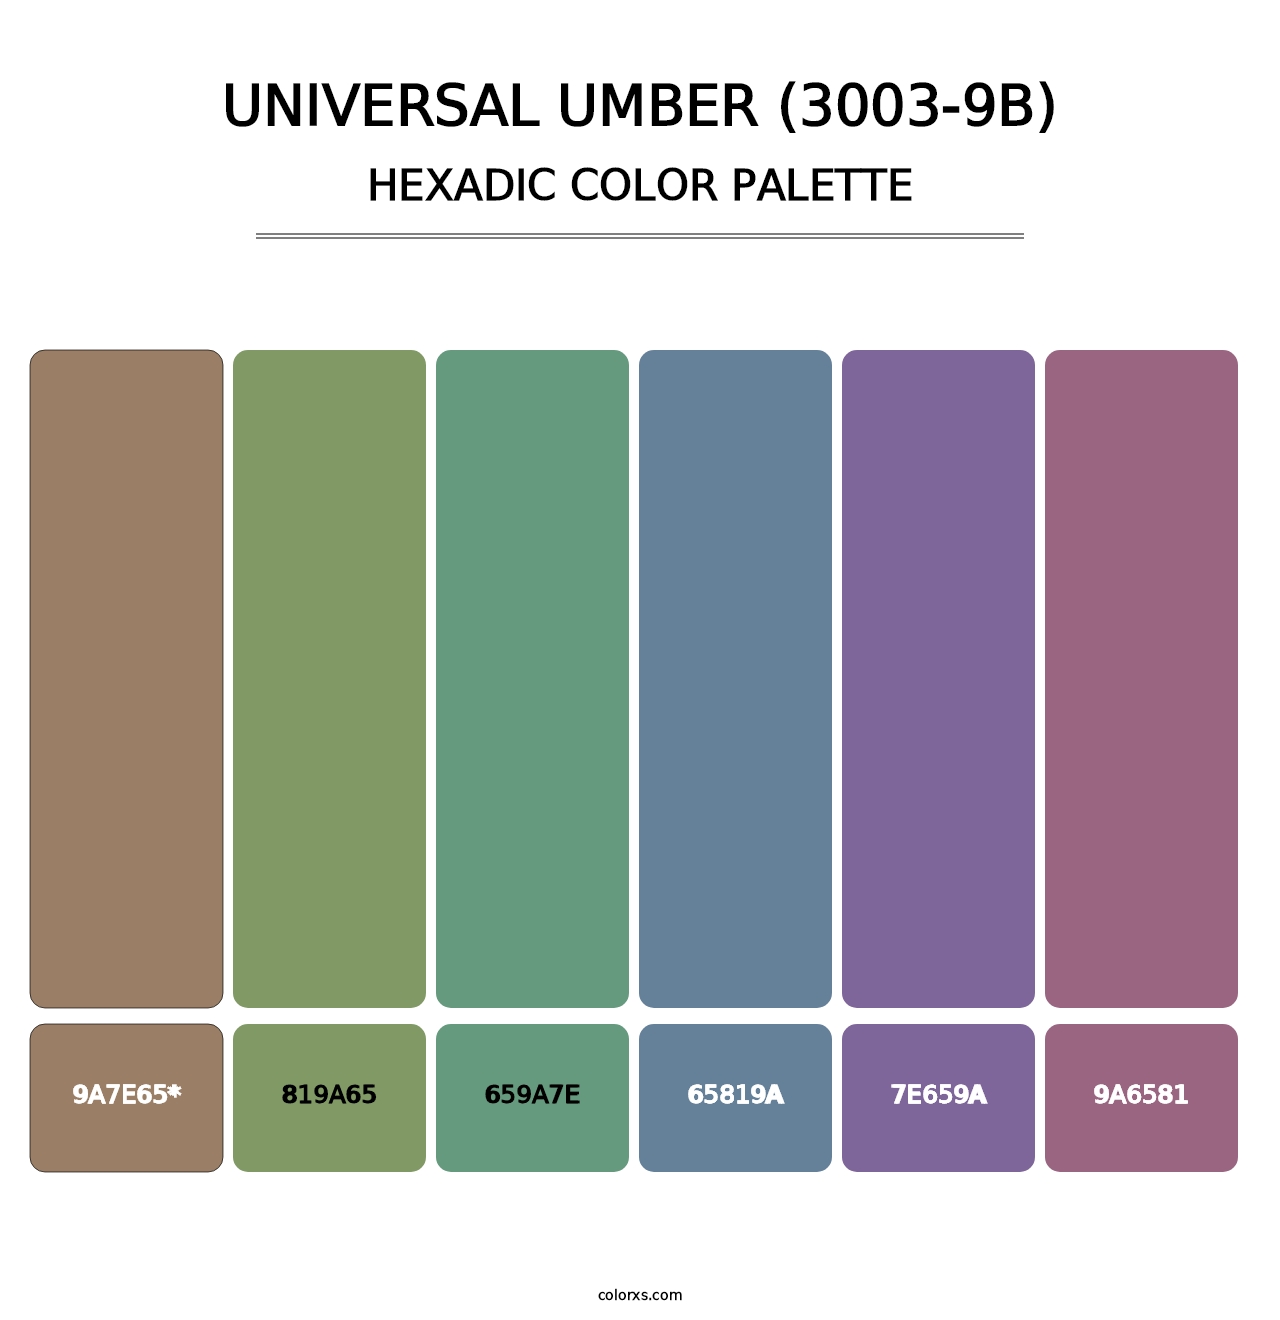 Universal Umber (3003-9B) - Hexadic Color Palette